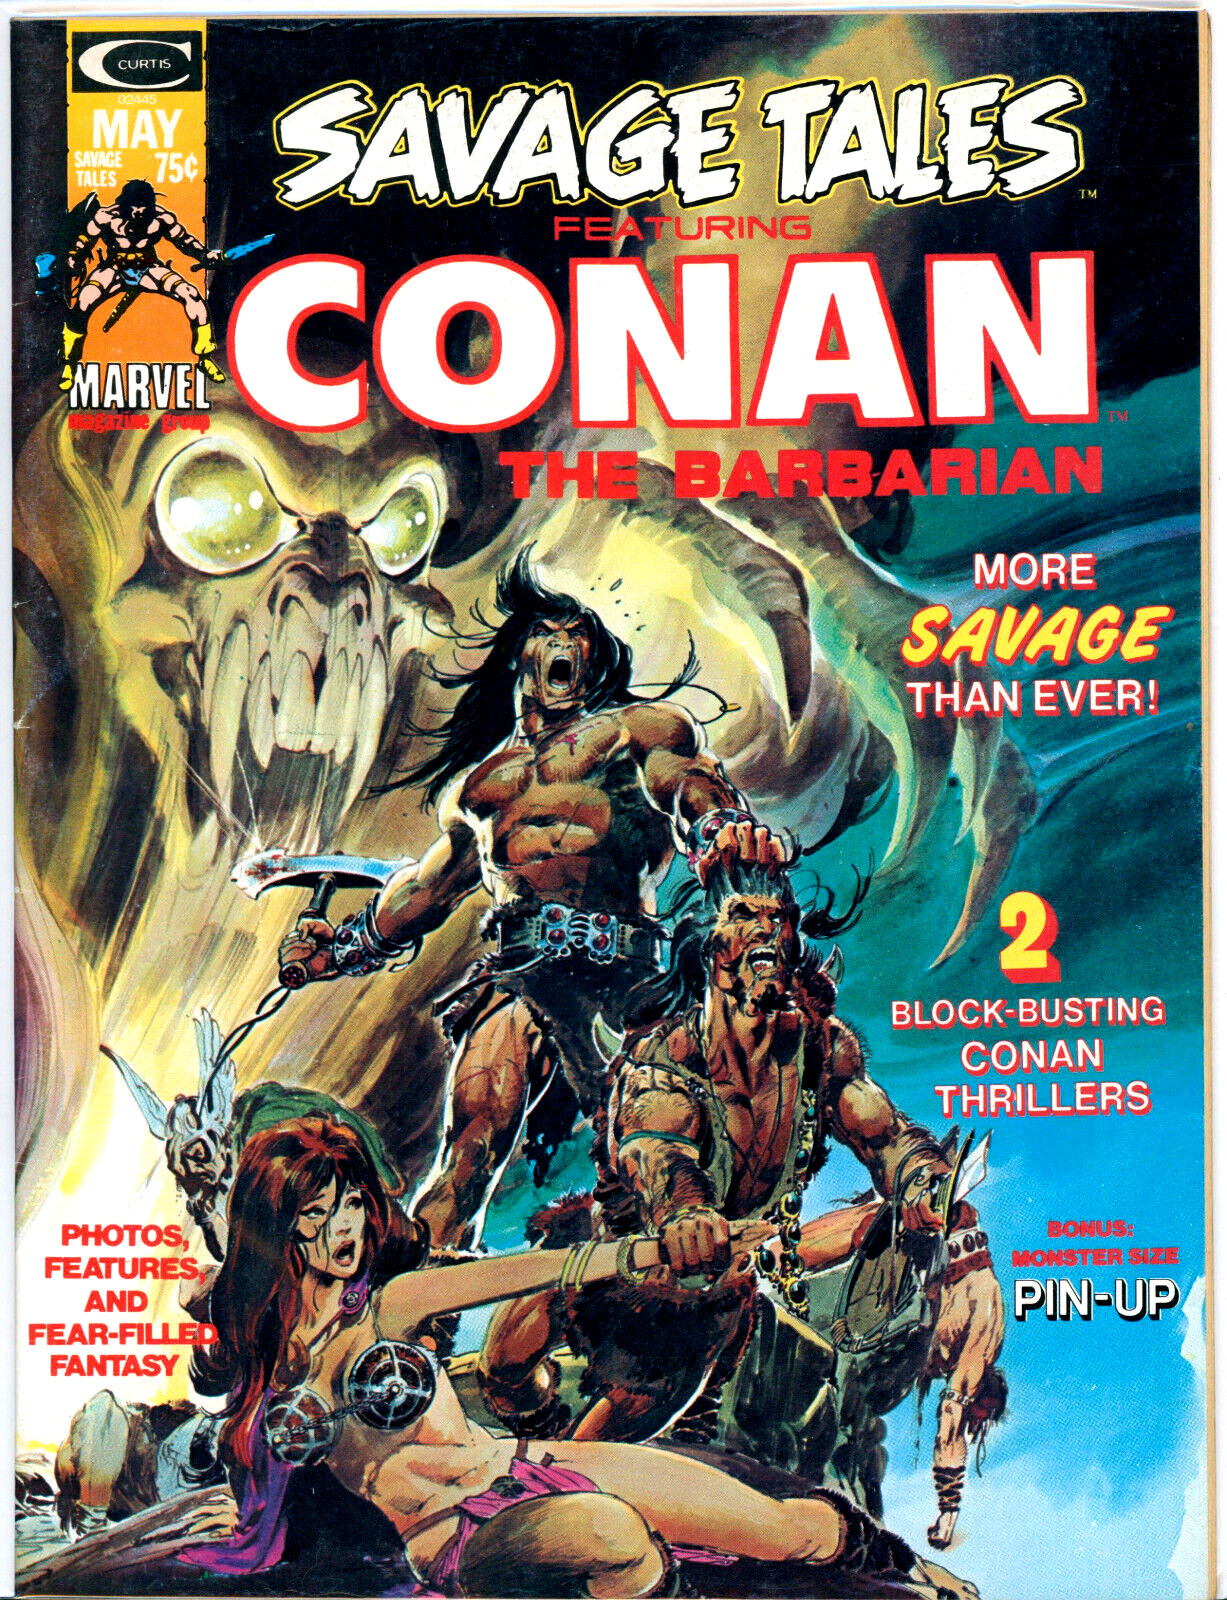 CONAN THE BARBARIAN SAVAGE TALES #4 1974 Marvel comic book magazine NEAL ADAMS,